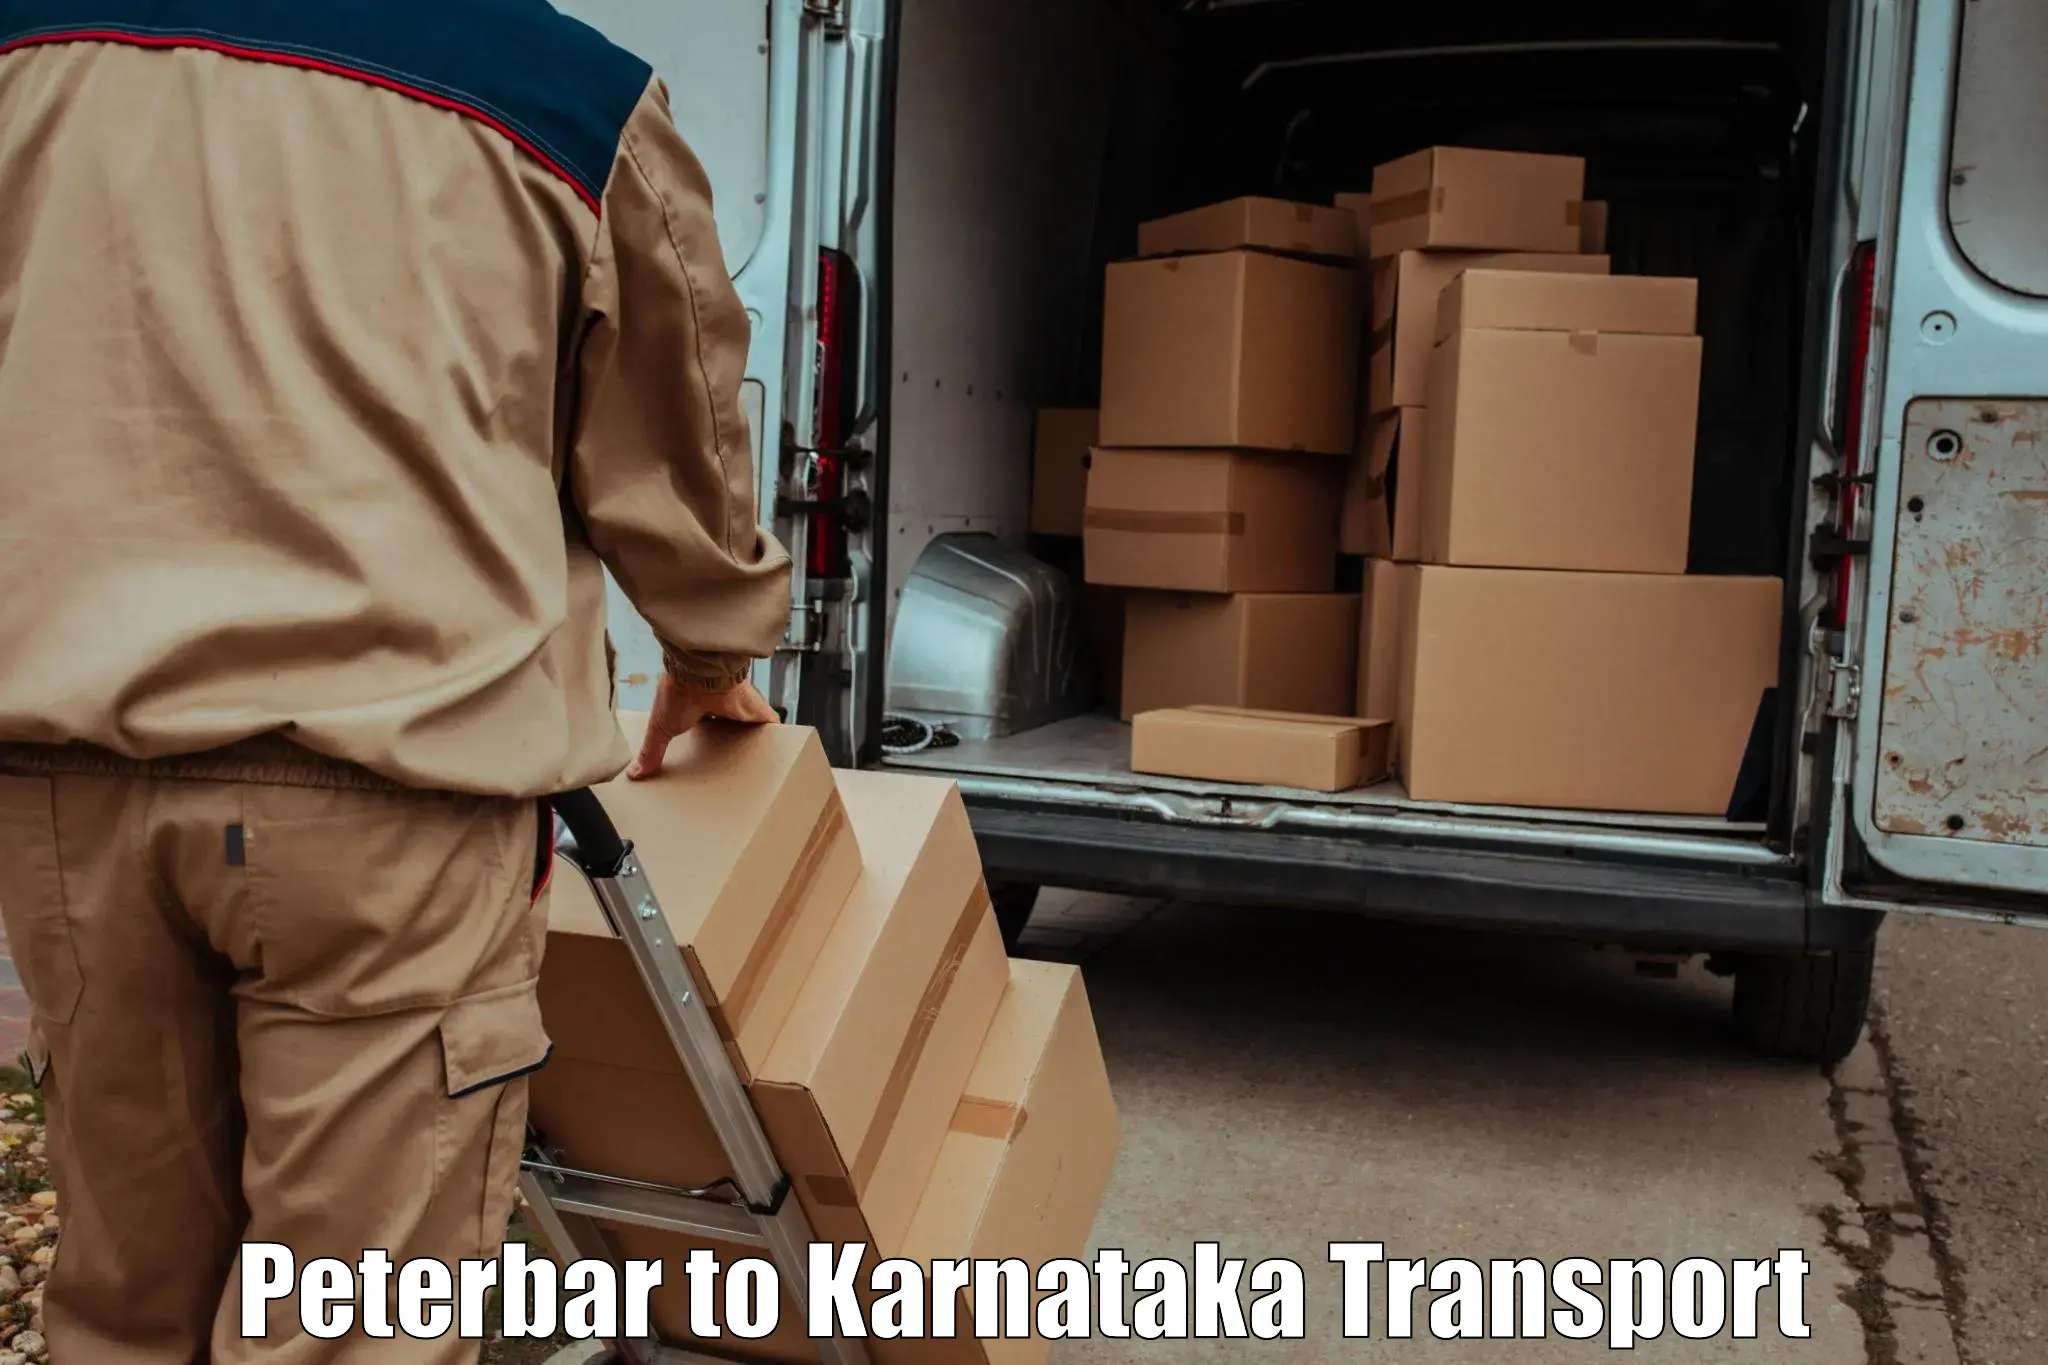 Furniture transport service Peterbar to Hosadurga